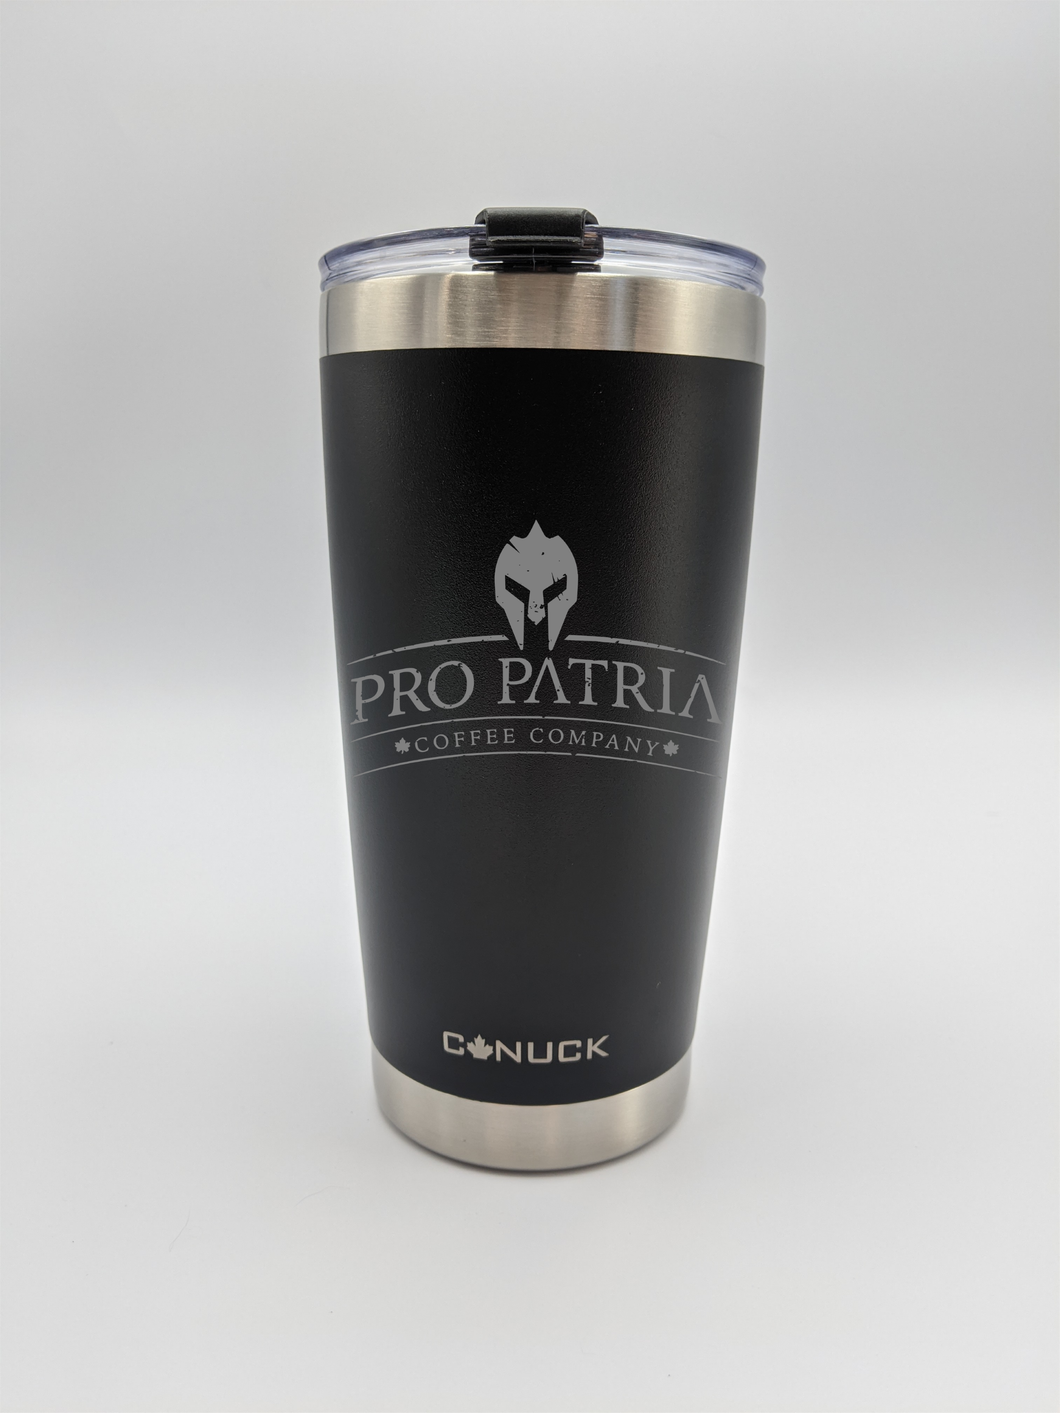 PRO PATRIA COFFEE x 20oz CANUCK CUP